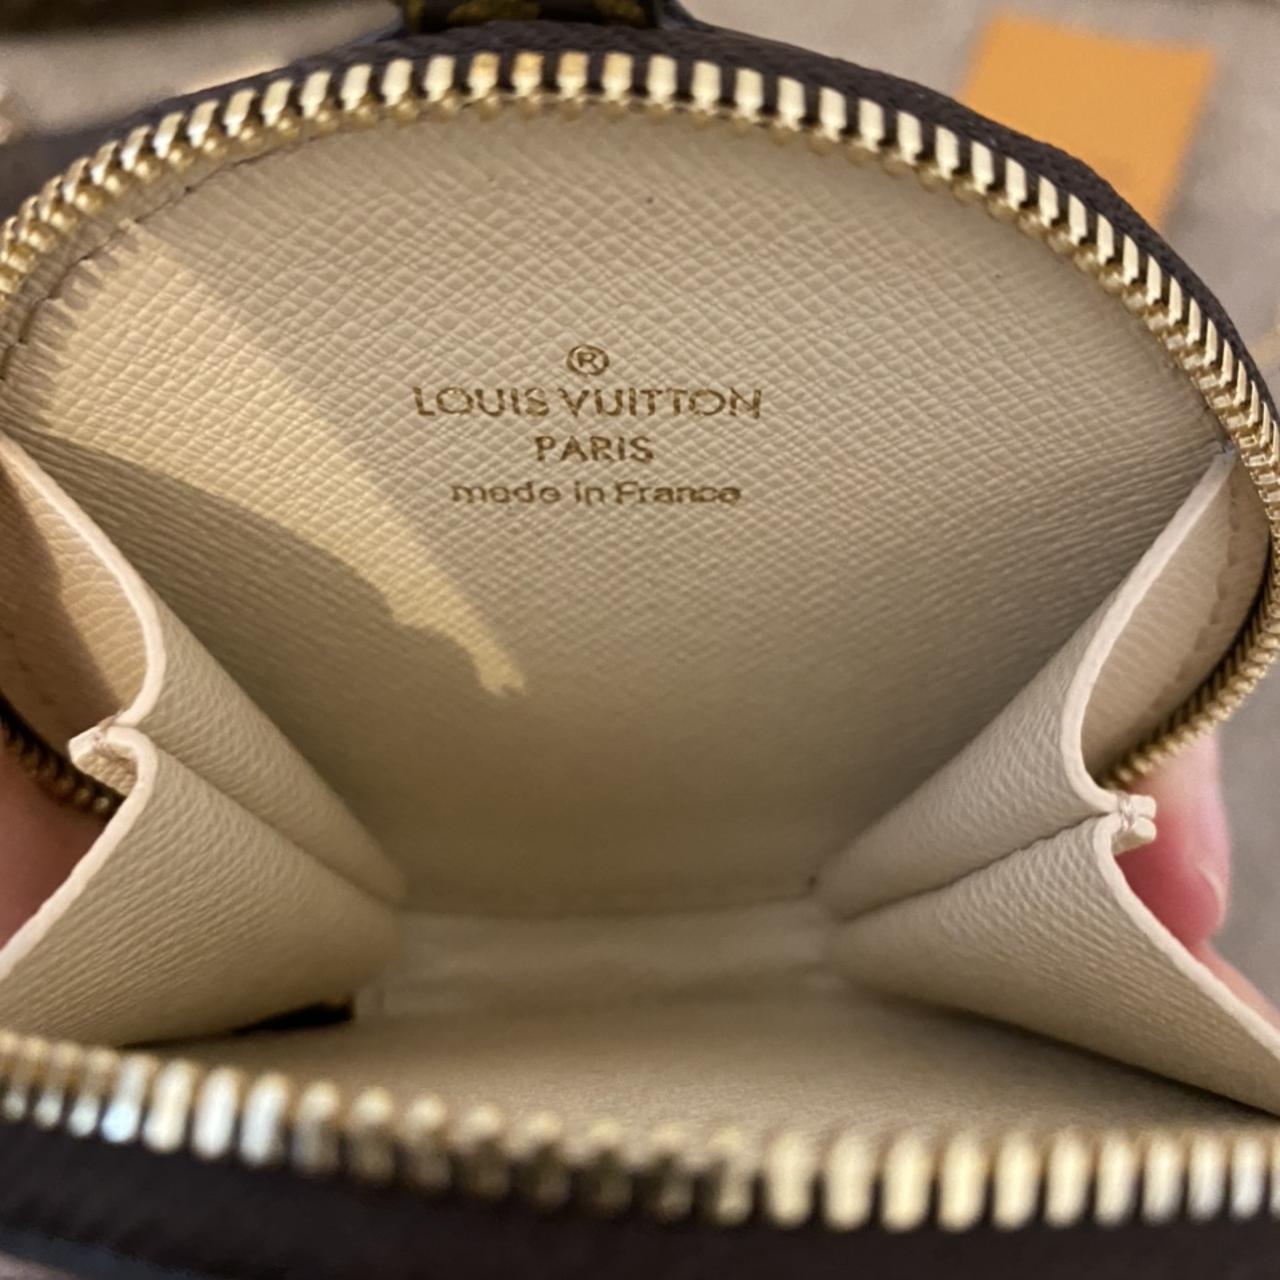 Louis Vuitton Kirigami Pochette Medium sized pouch - Depop